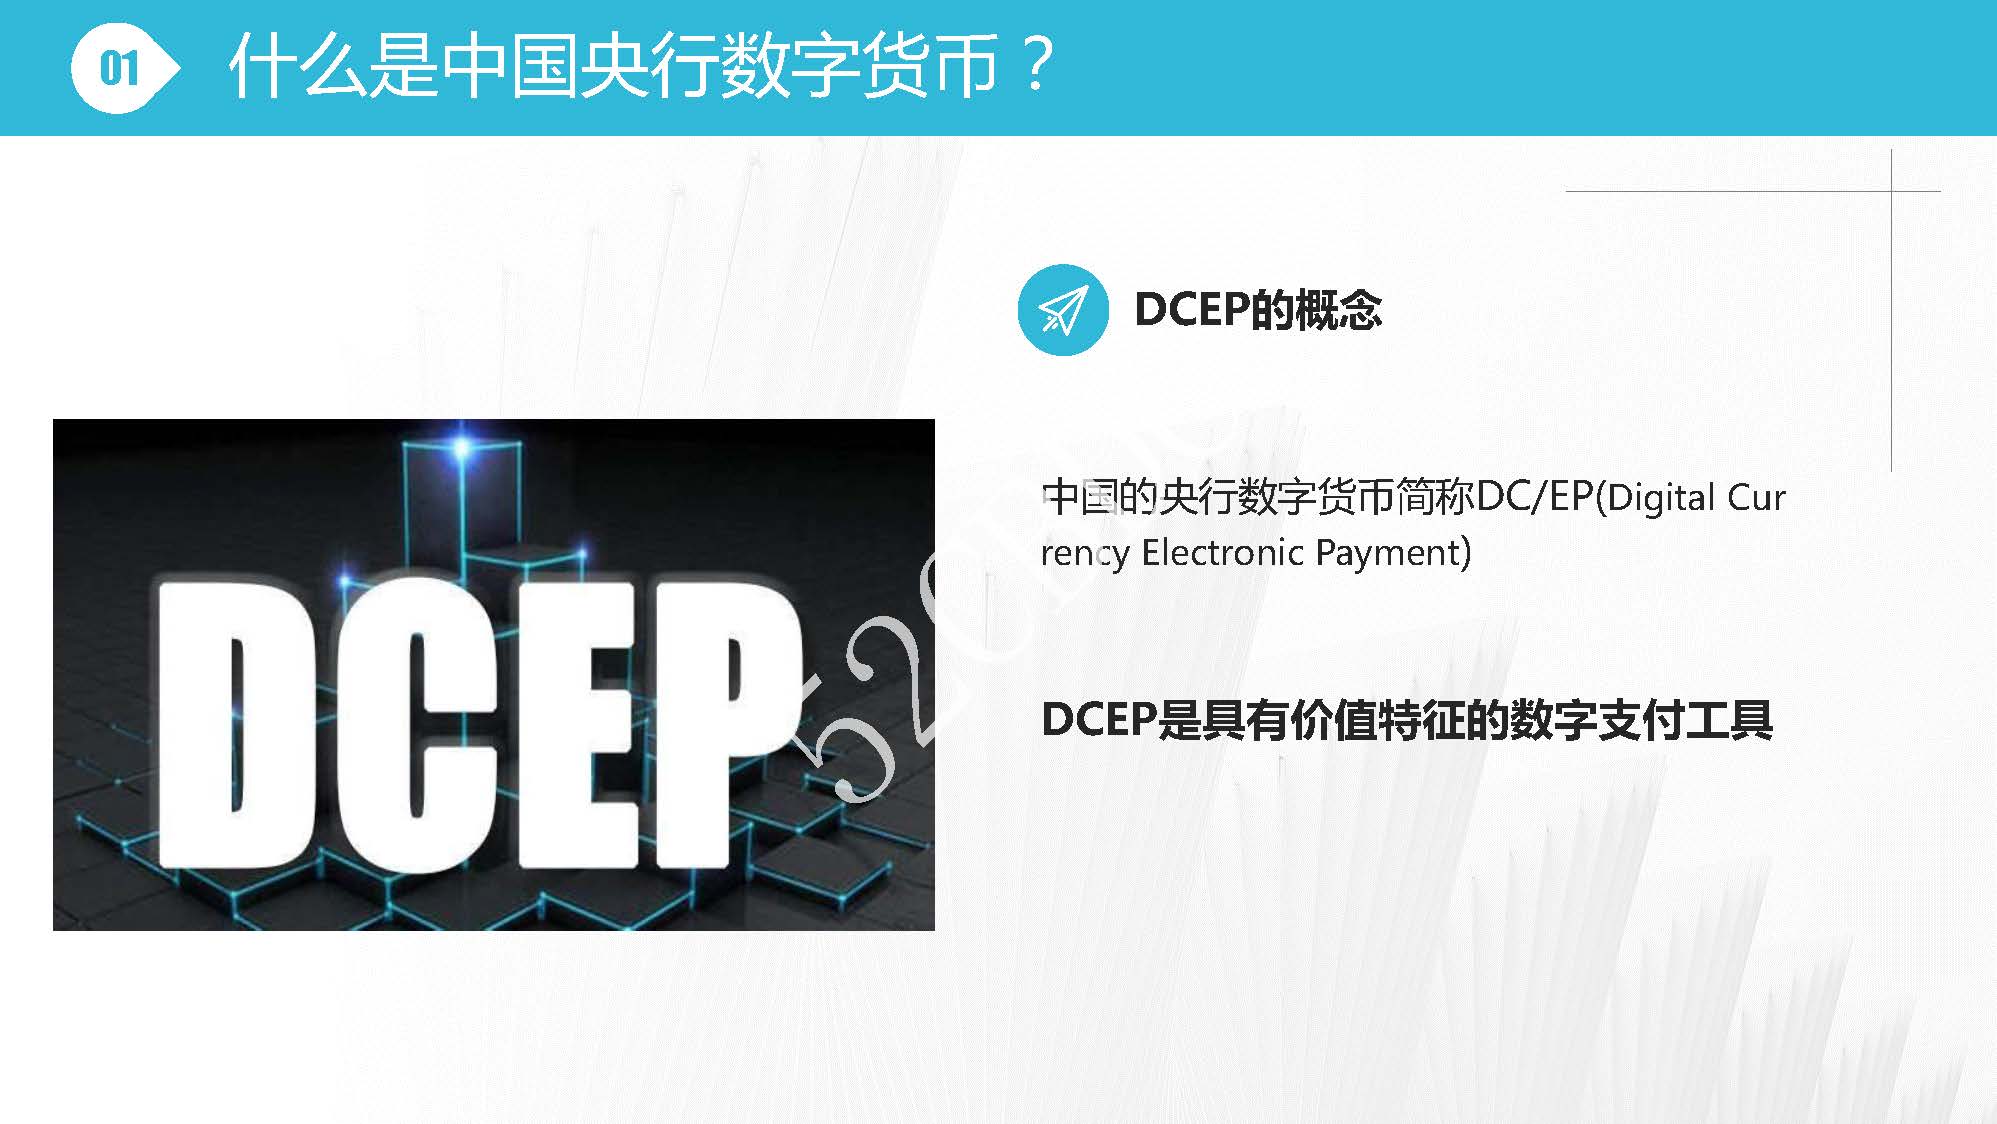 [dcep数字货币钱包下载]dc ep数字货币钱包app下载